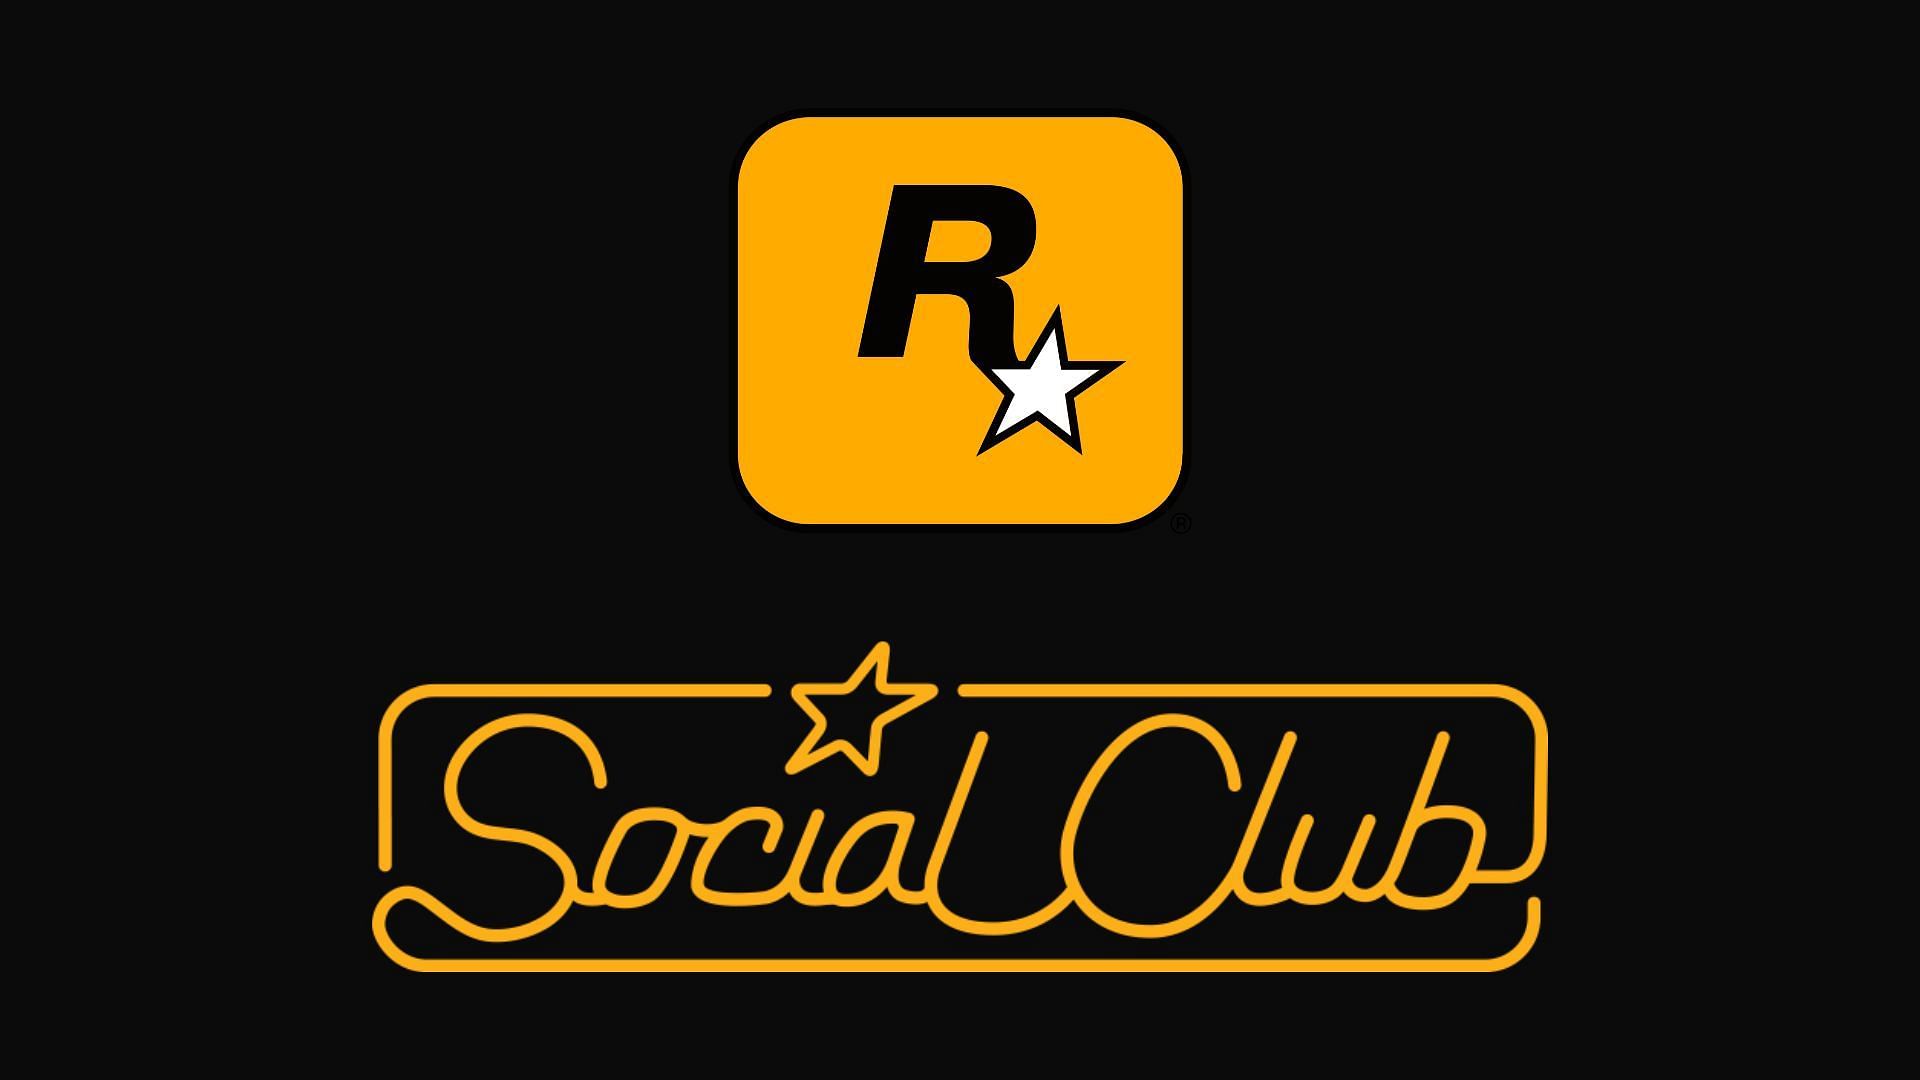 social club rockstar download gta 5